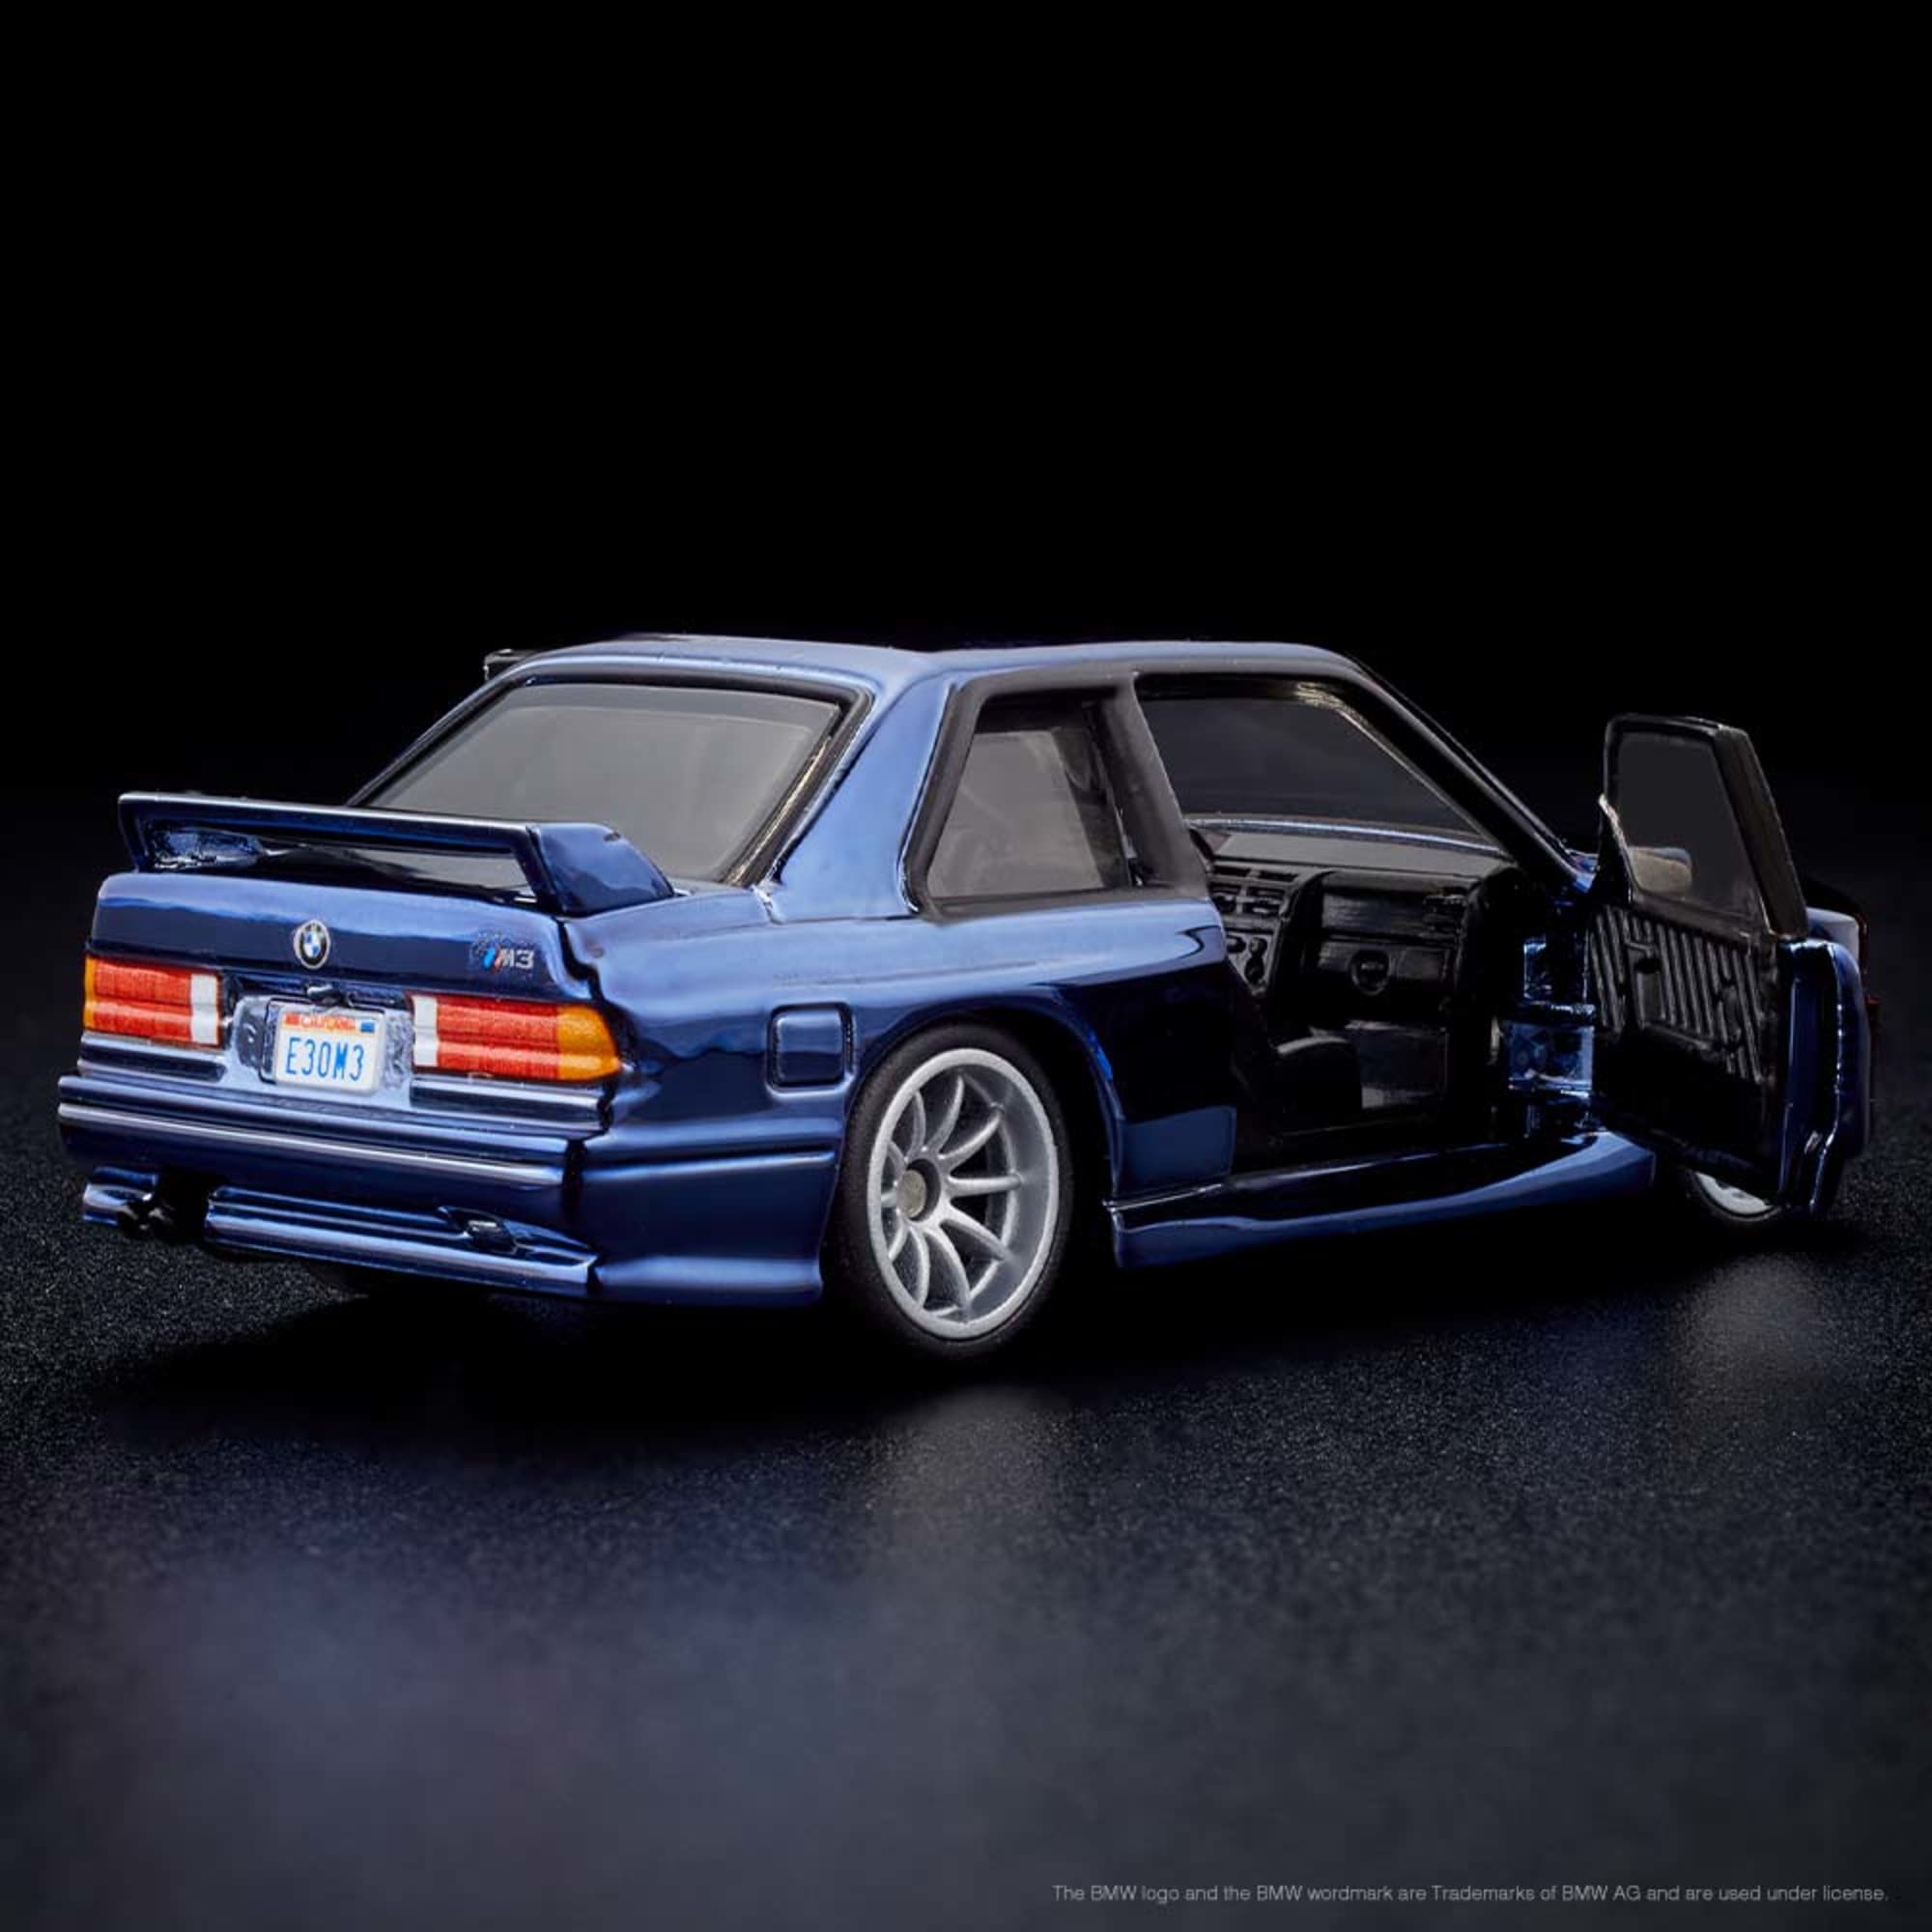 RLC Exclusive 1991 BMW M3 – Mattel Creations